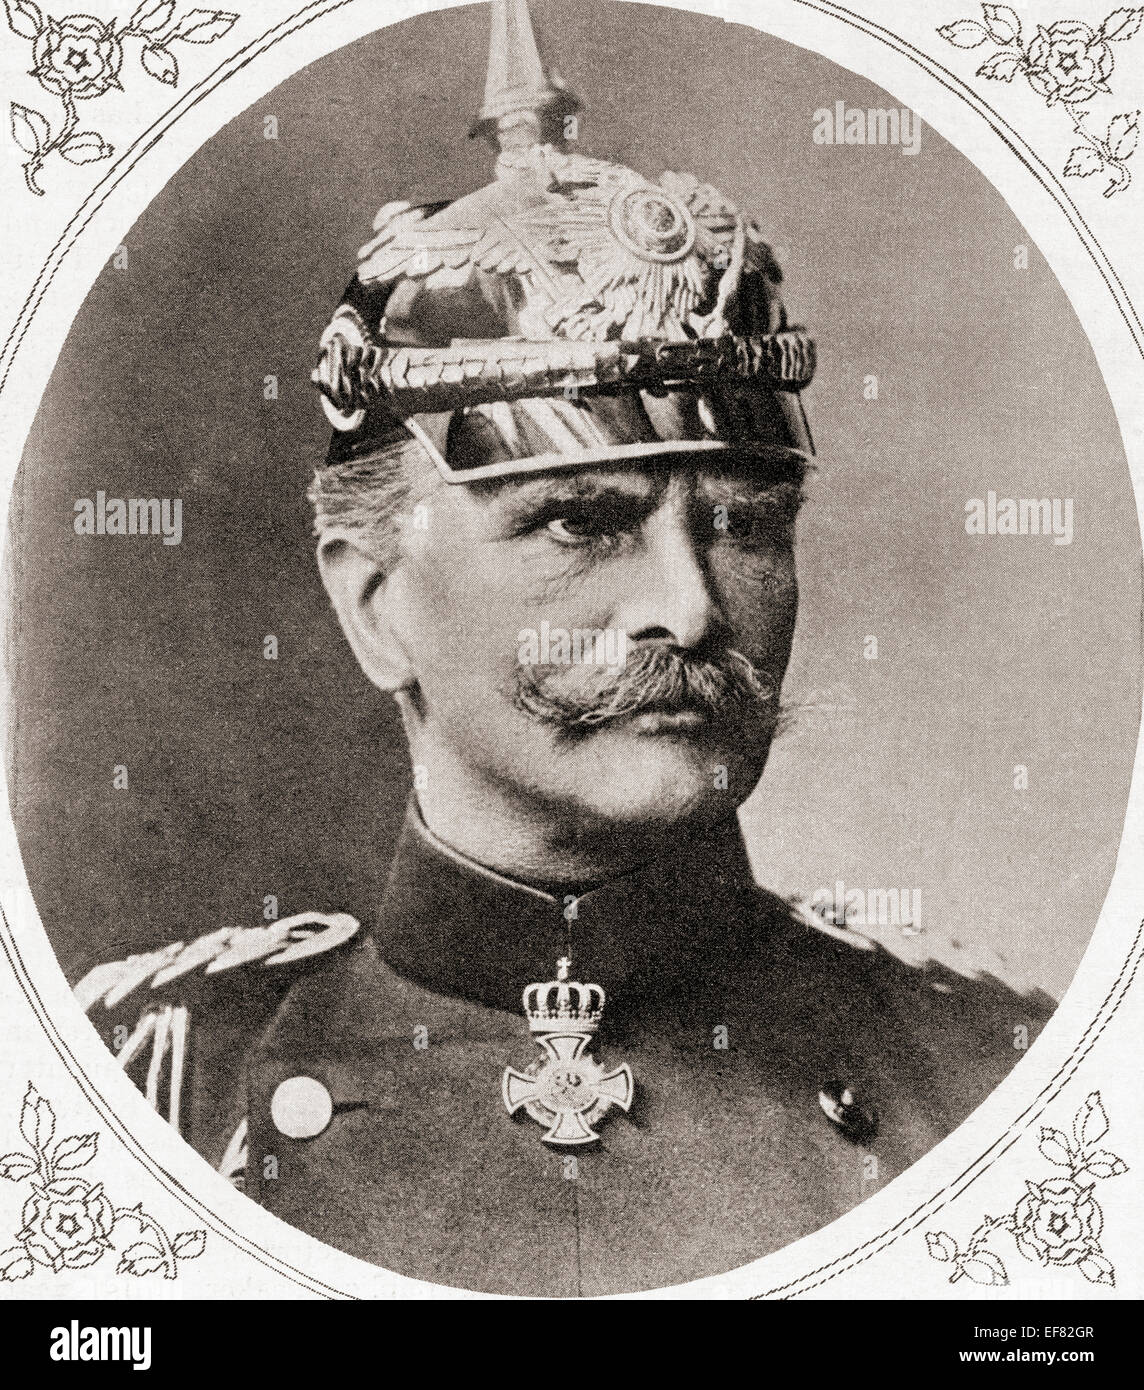 Anton Ludwig August von Mackensen, 1849 – 1945, born August Mackensen. German soldier and field marshal.  From The Illustrated War News, published 1915. Stock Photo